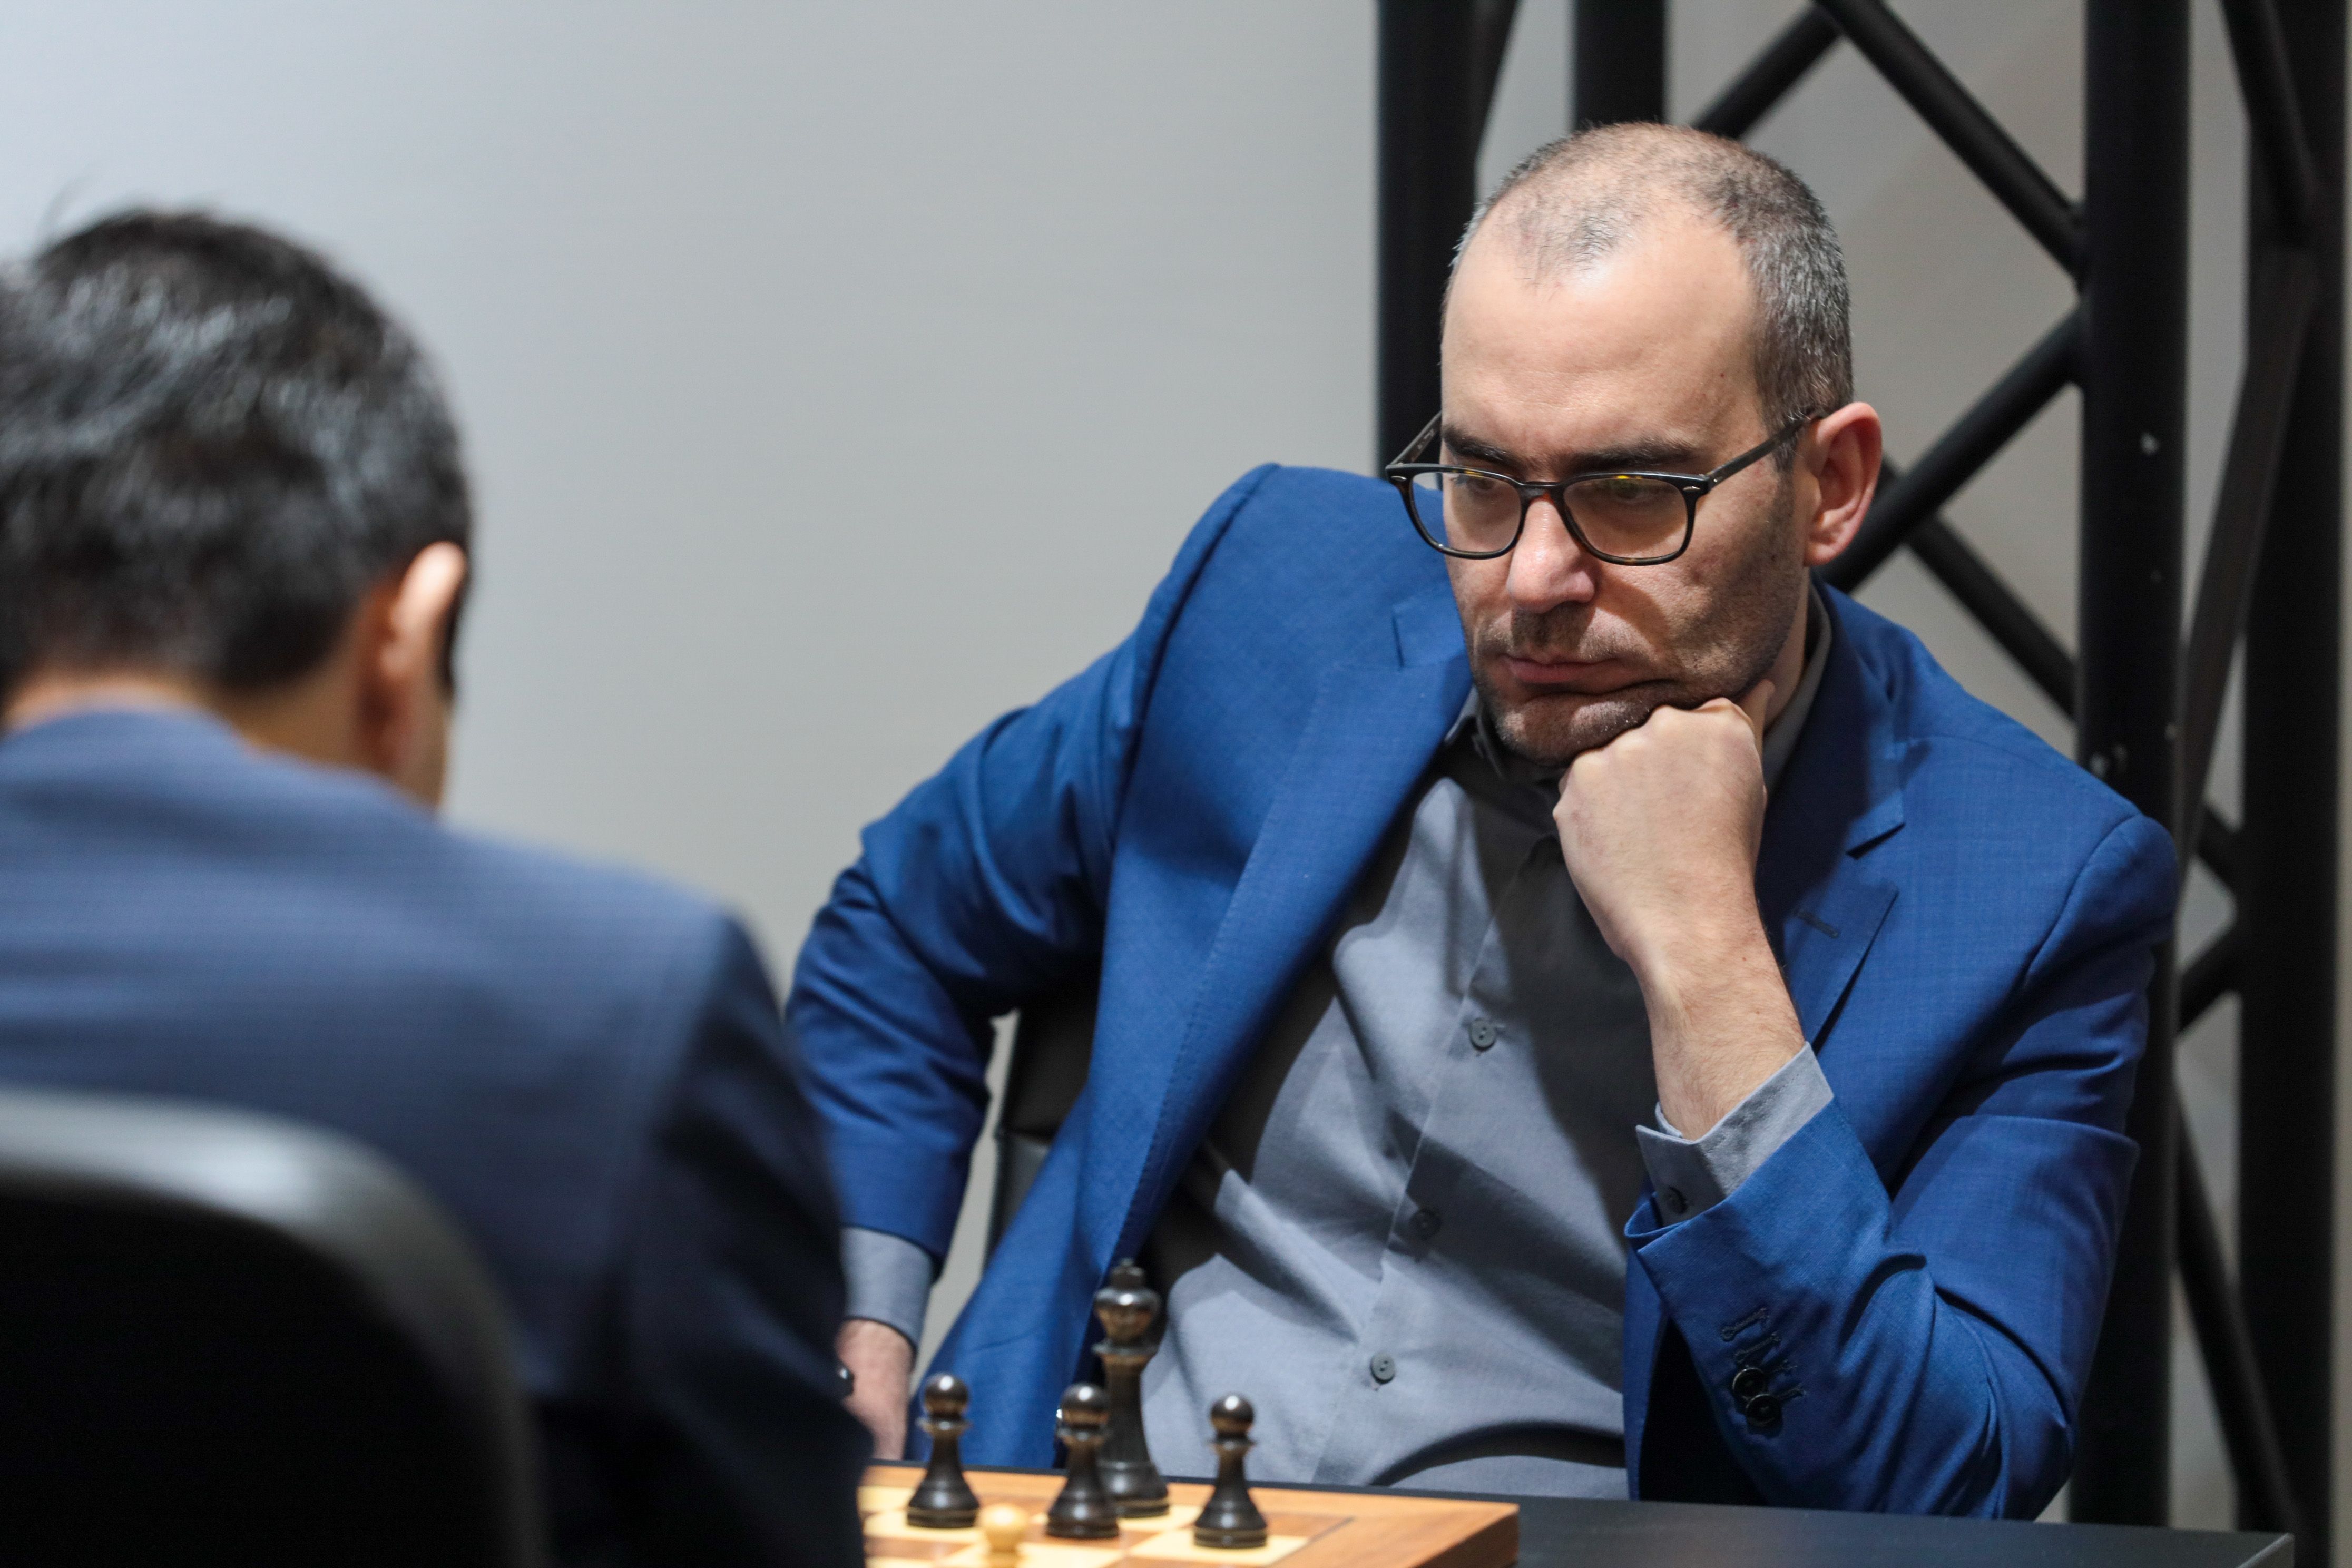 Chess is fun at the FIDE Grand Prix 2022